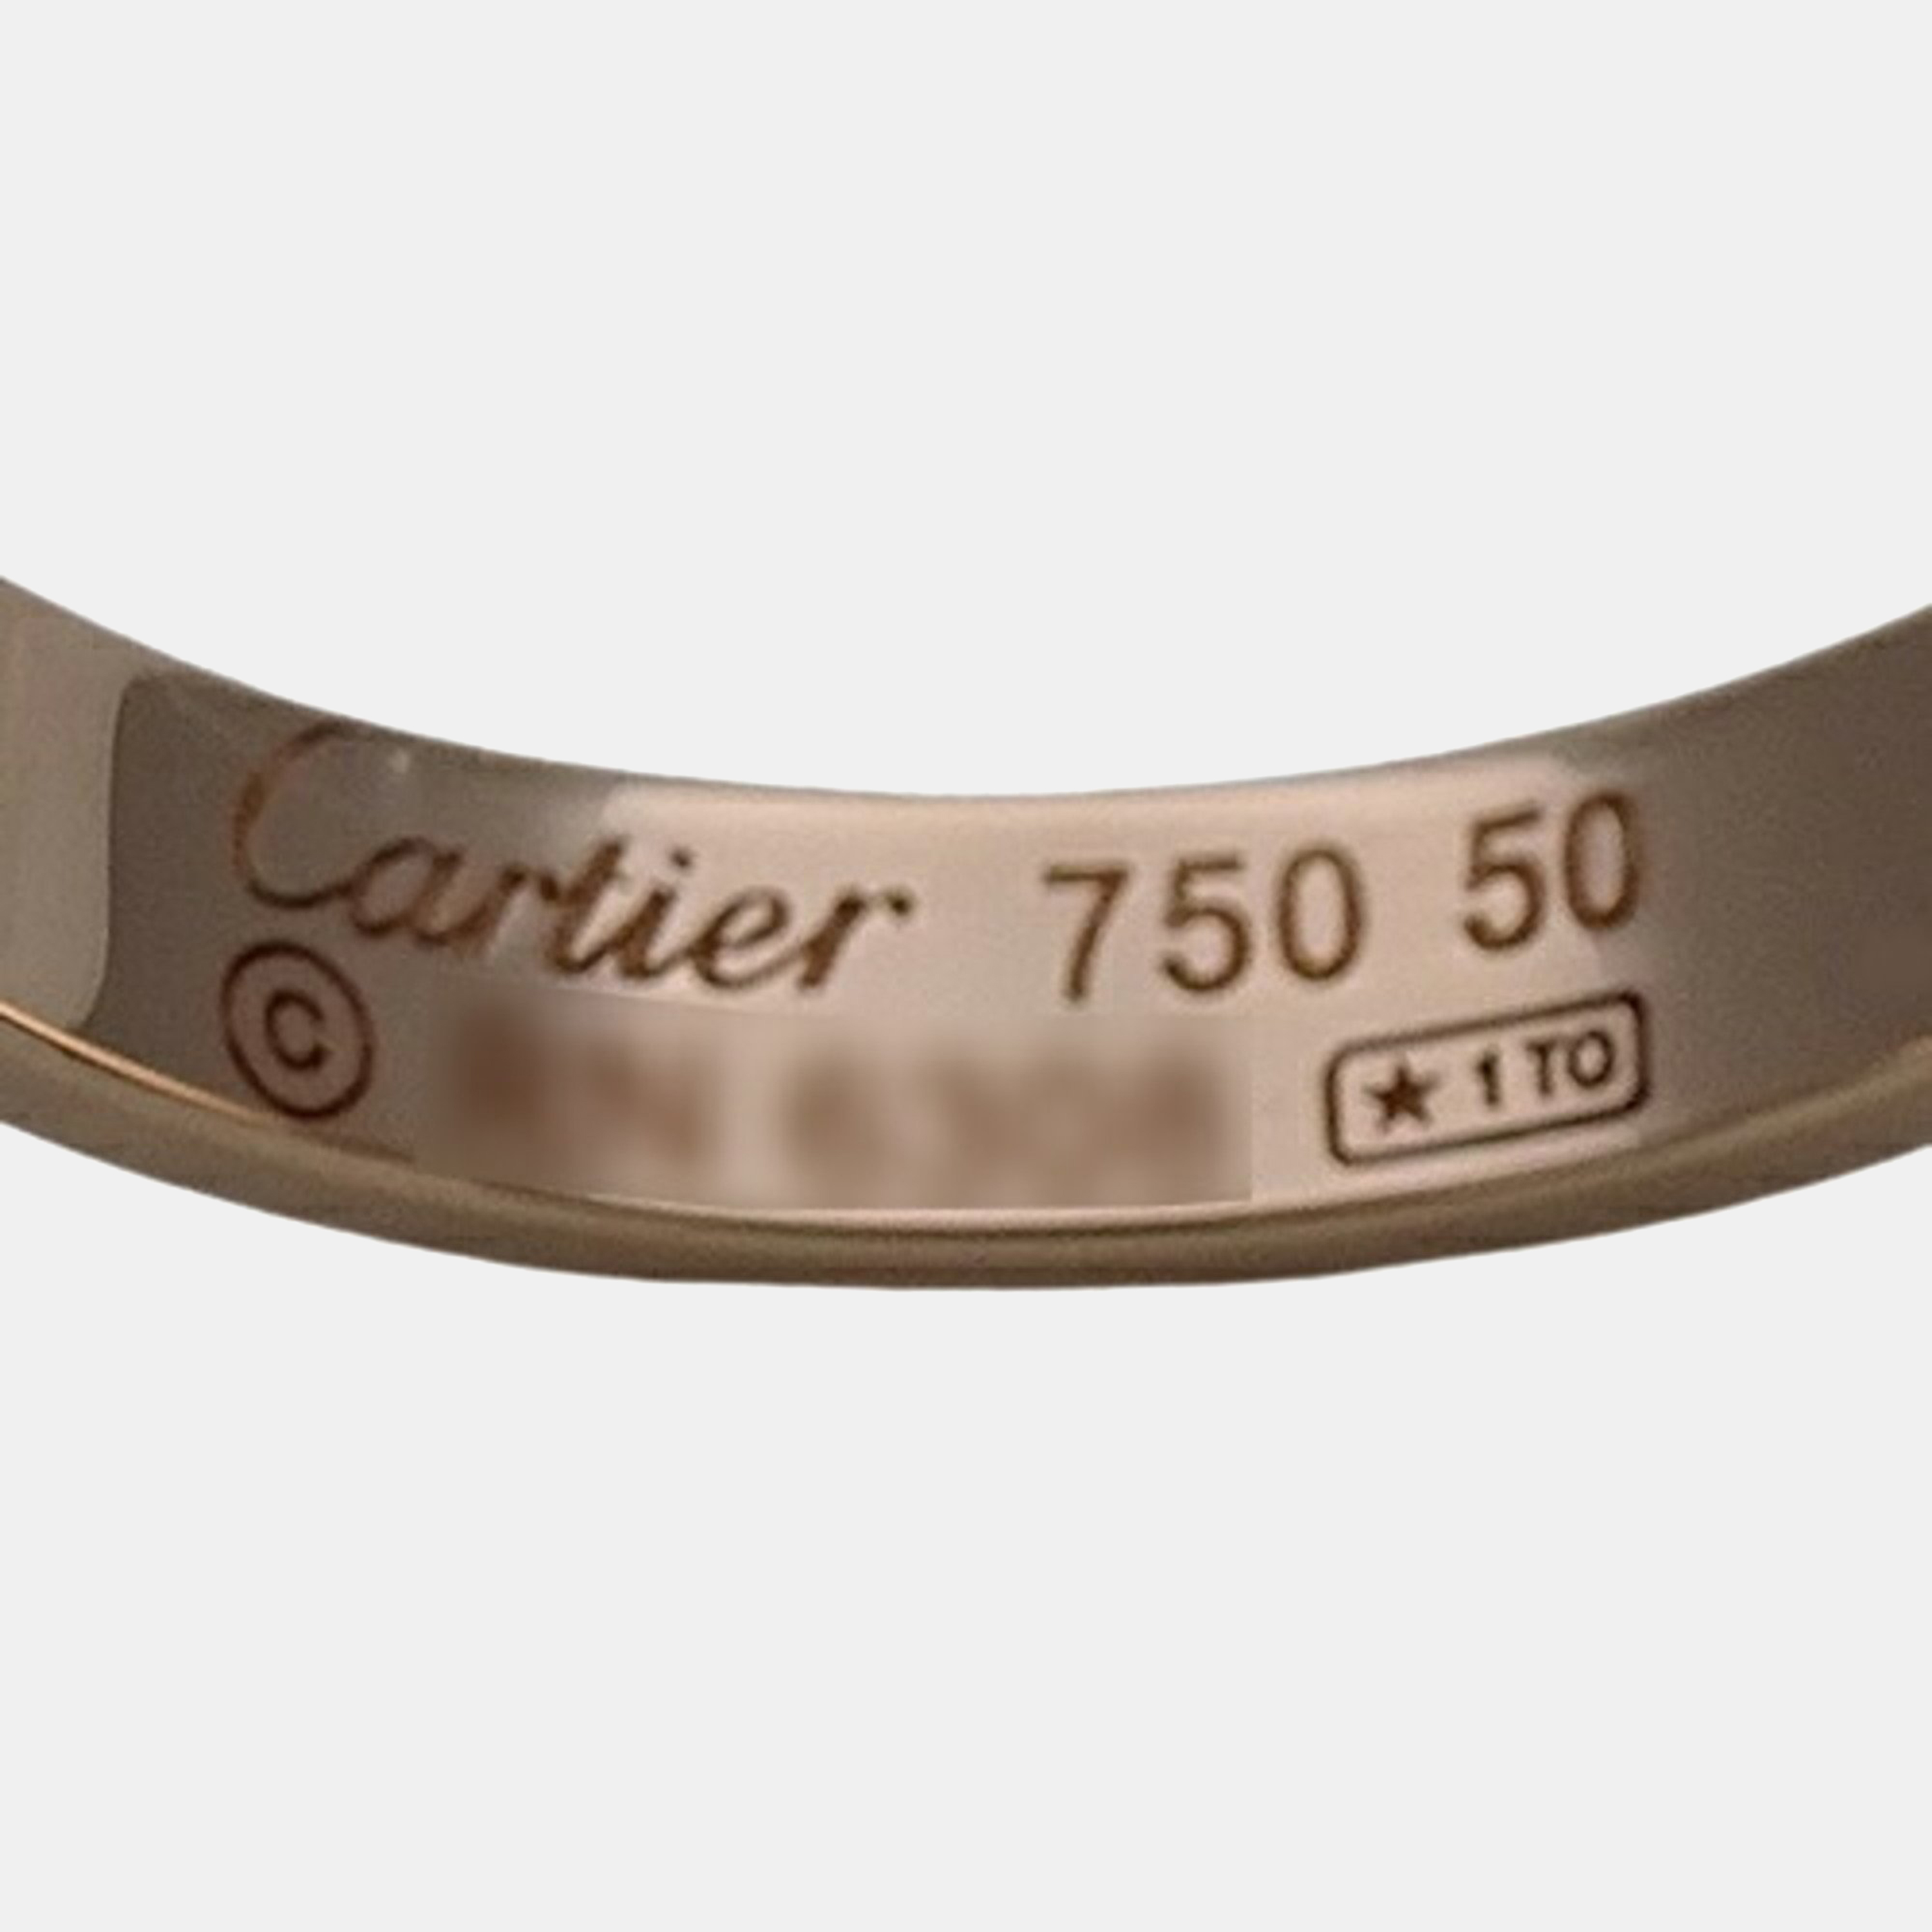 Cartier 18K Rose Gold Love Band Ring EU 50